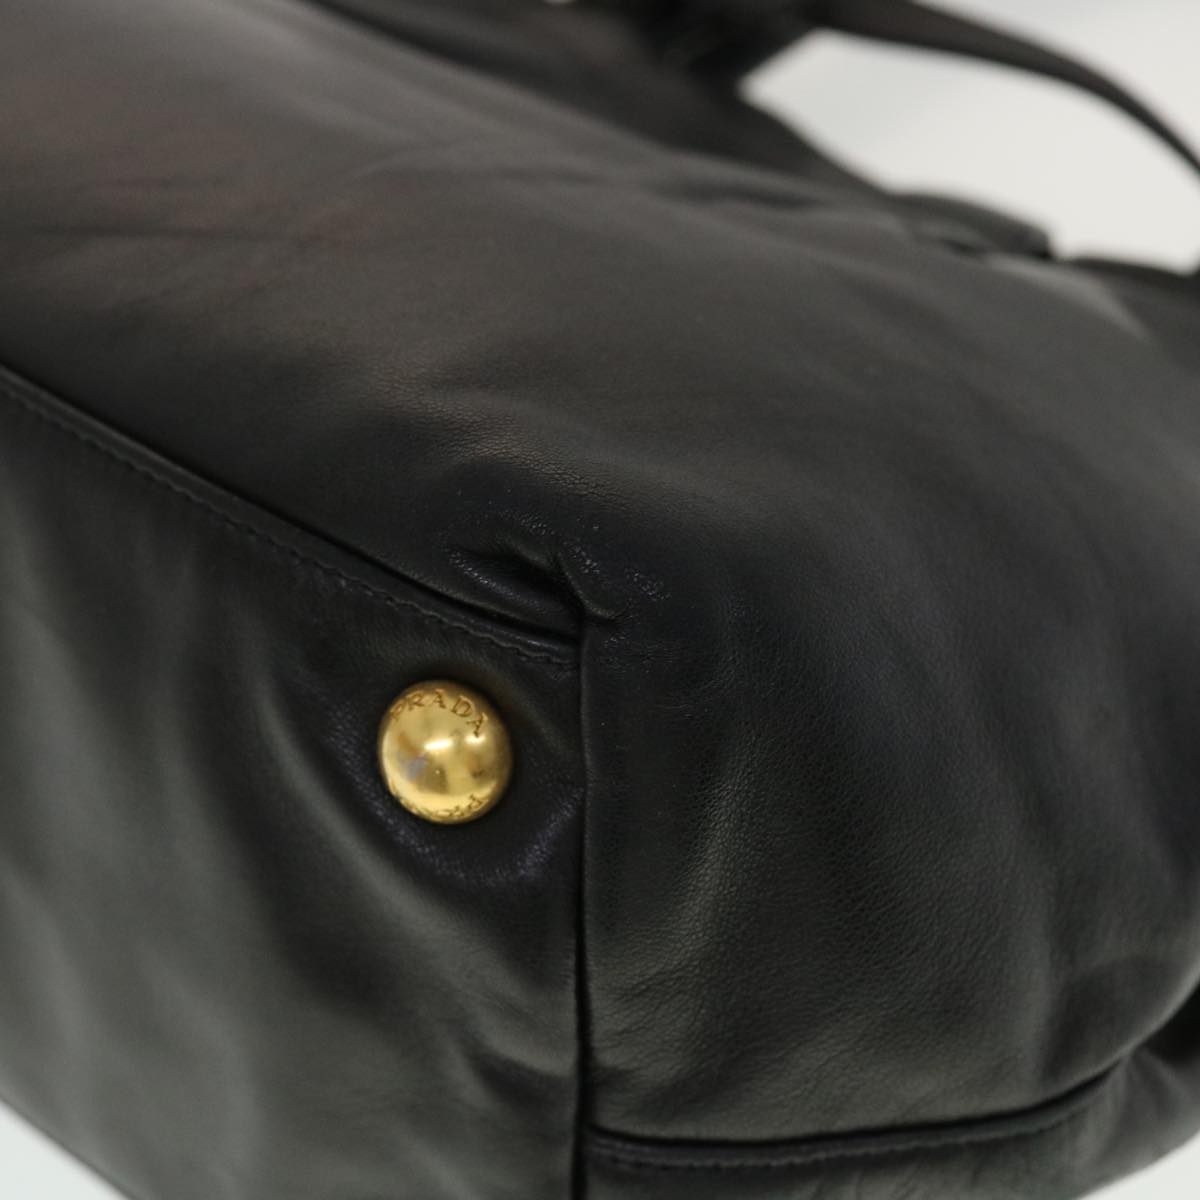 PRADA Ribbon Shoulder Bag Leather 2way Black Pink Auth 44297